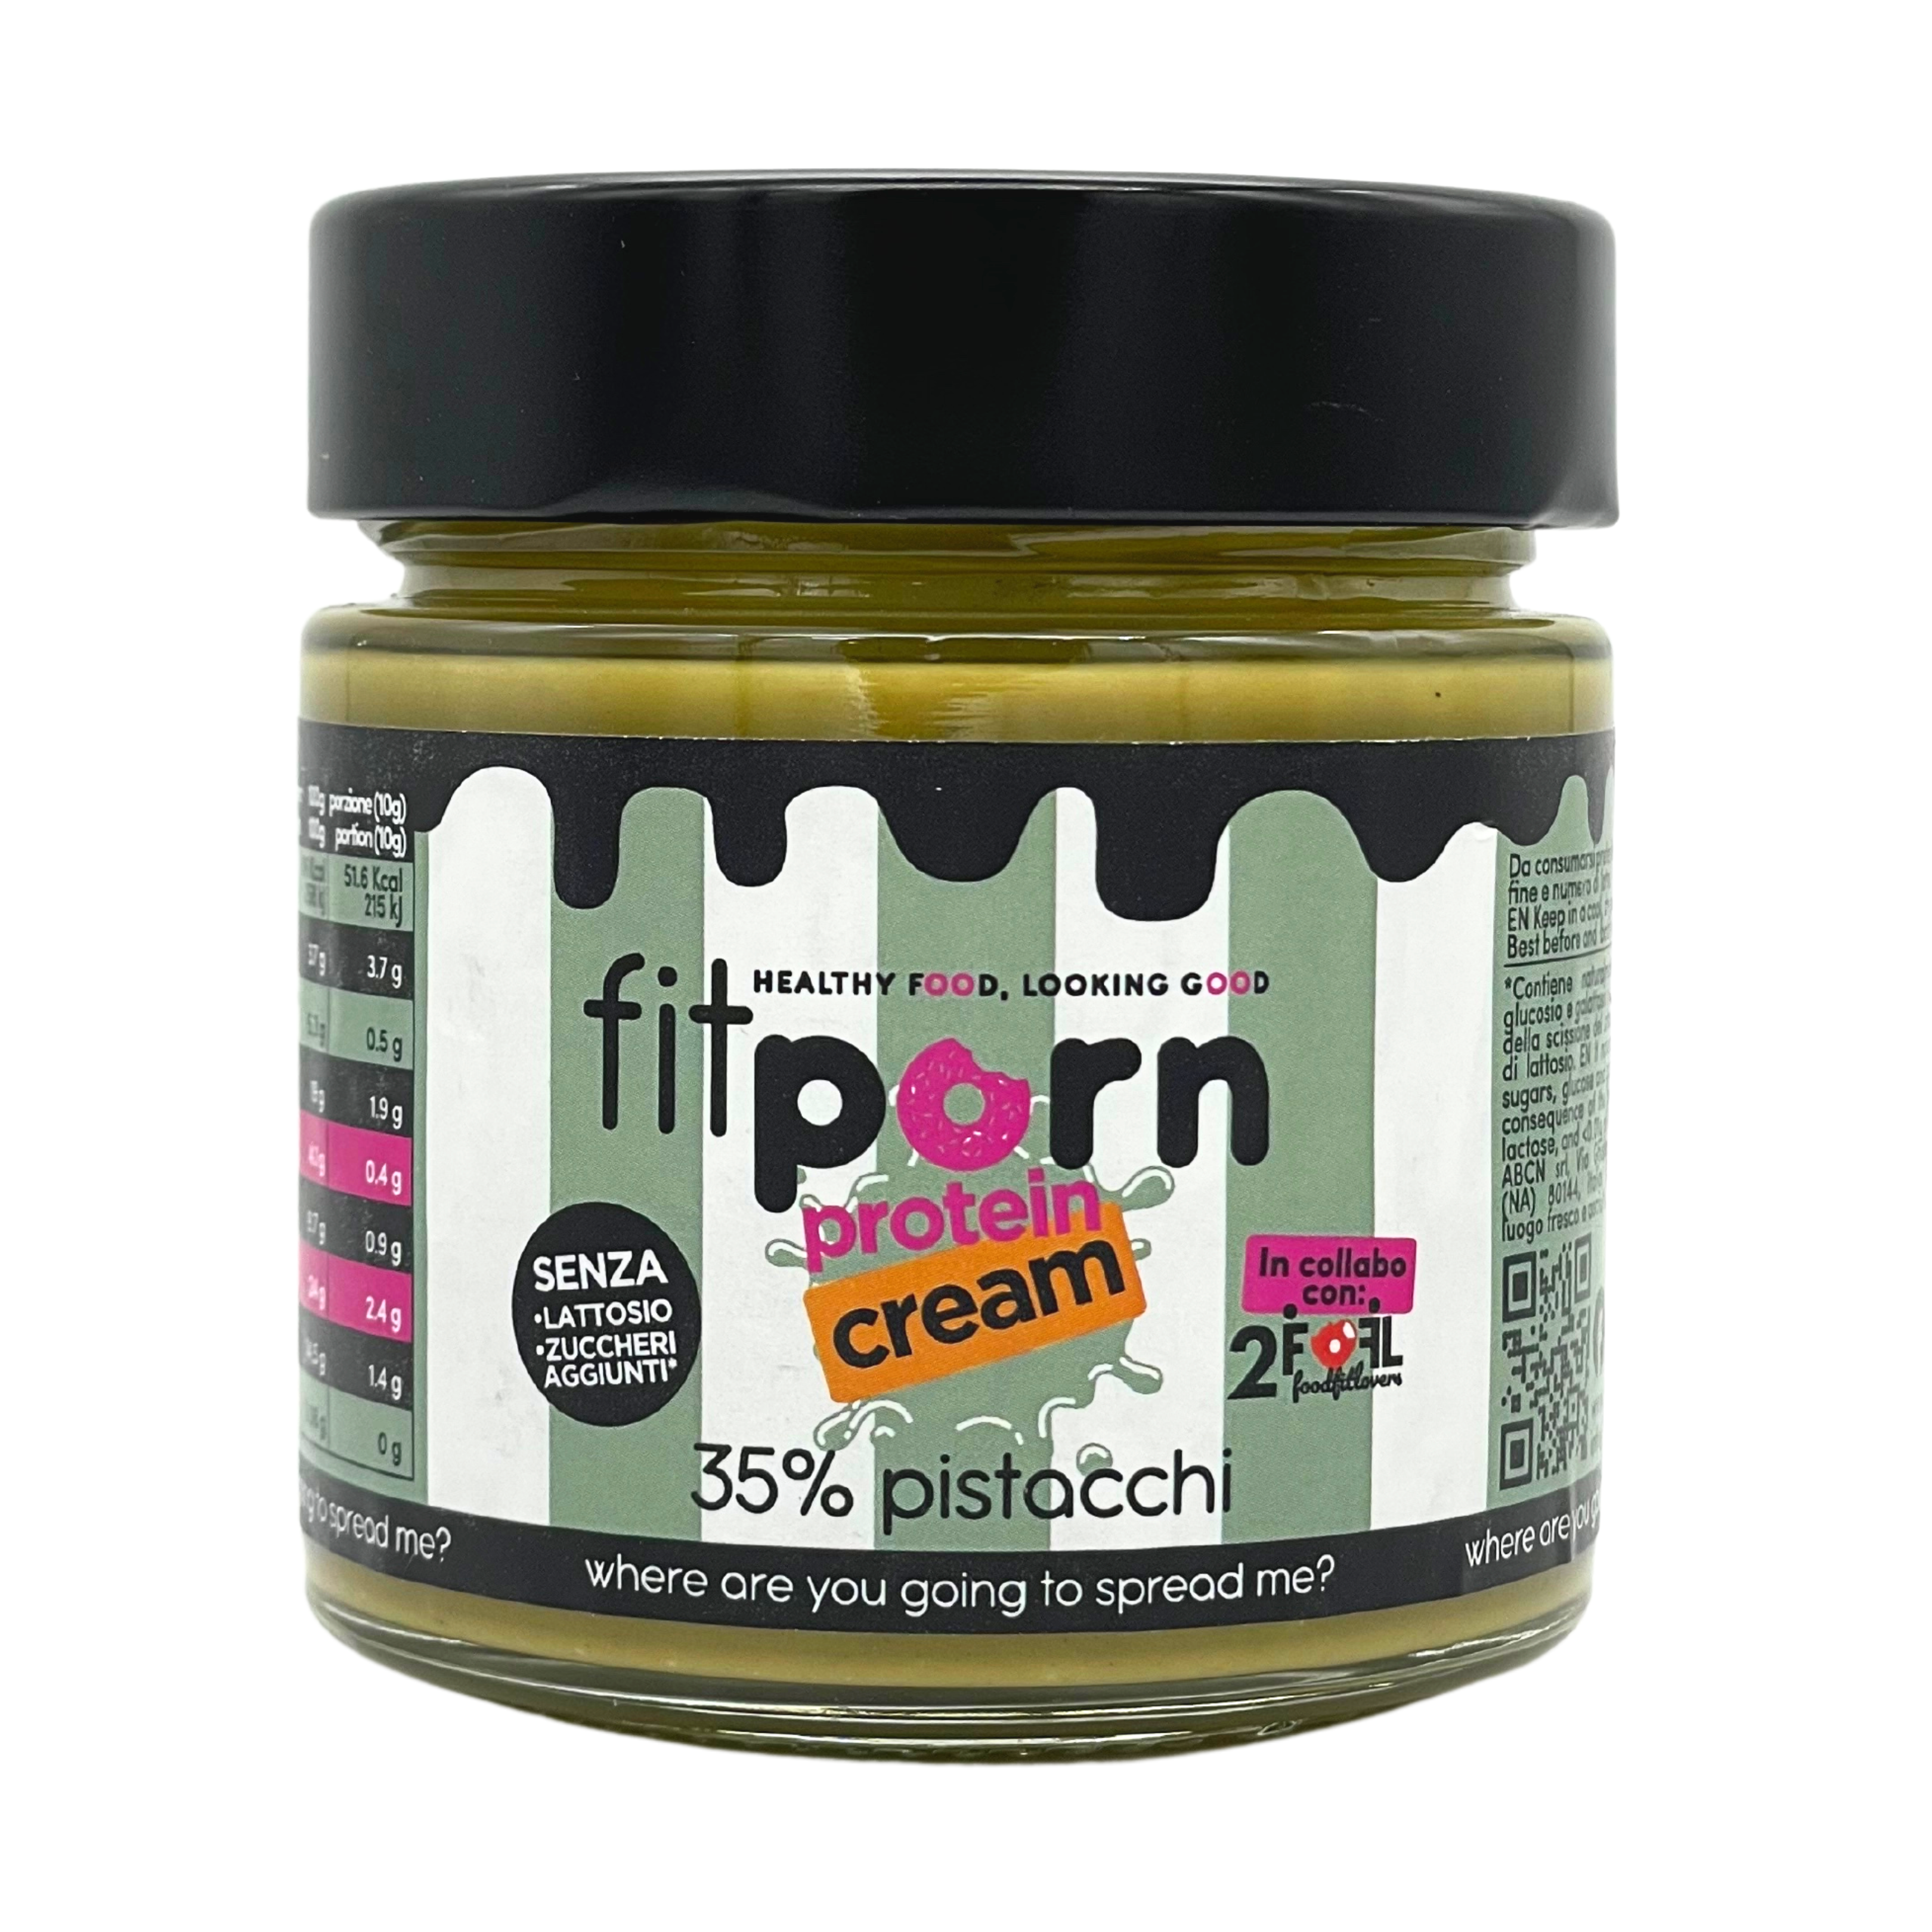 Fitporn - Crema proteica gusto Pistacchi (35%) 200g